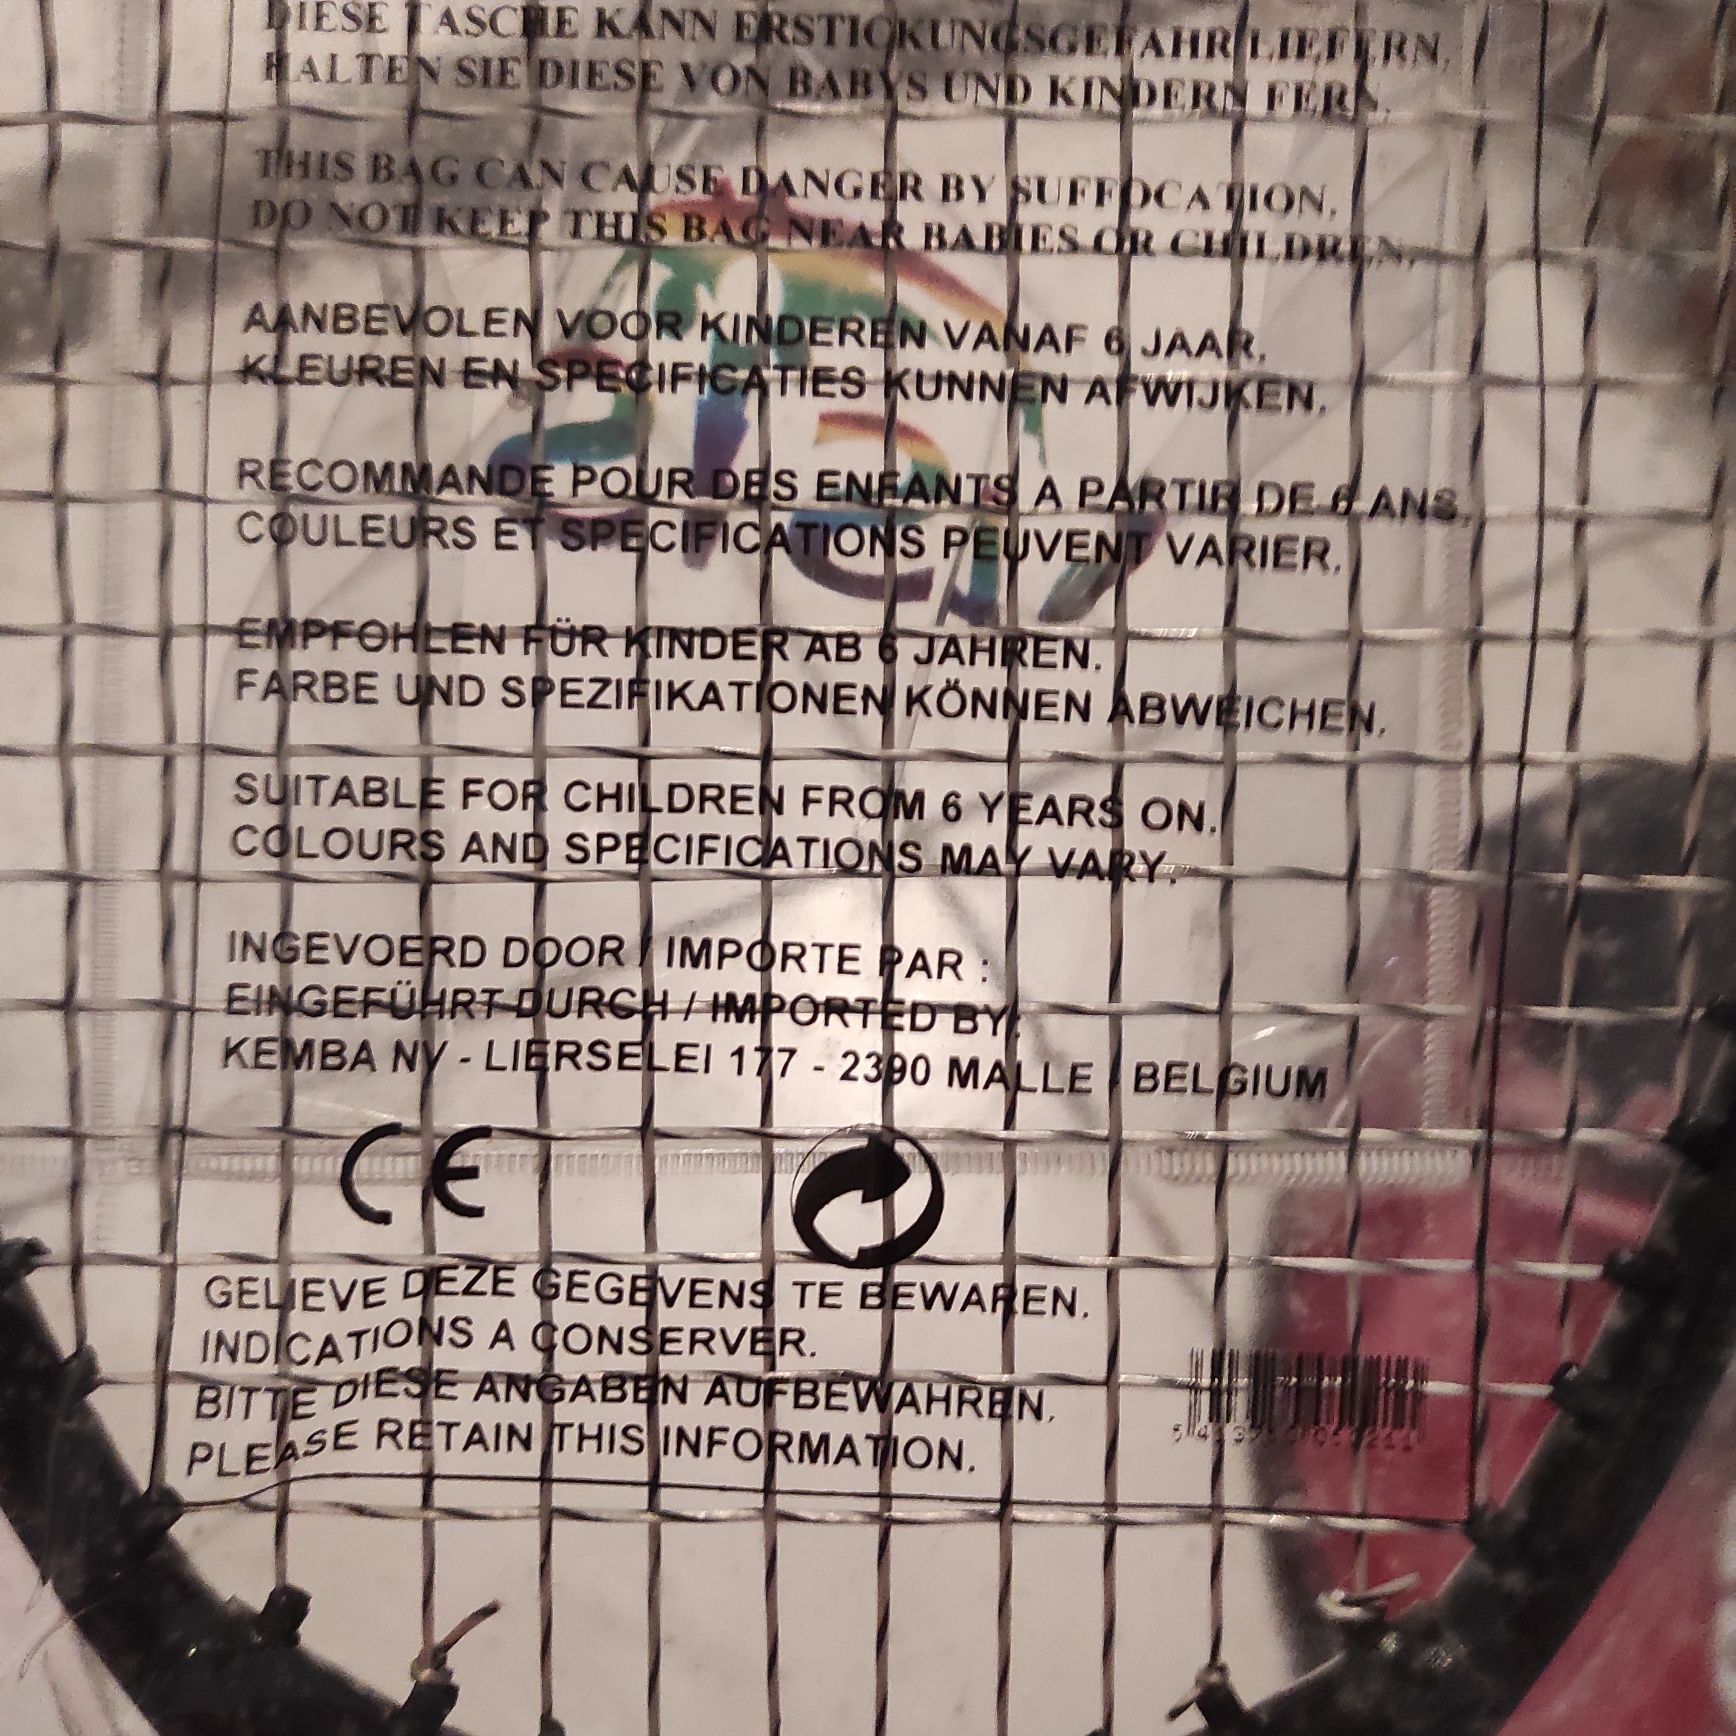 Dunlop rakieta do squasha